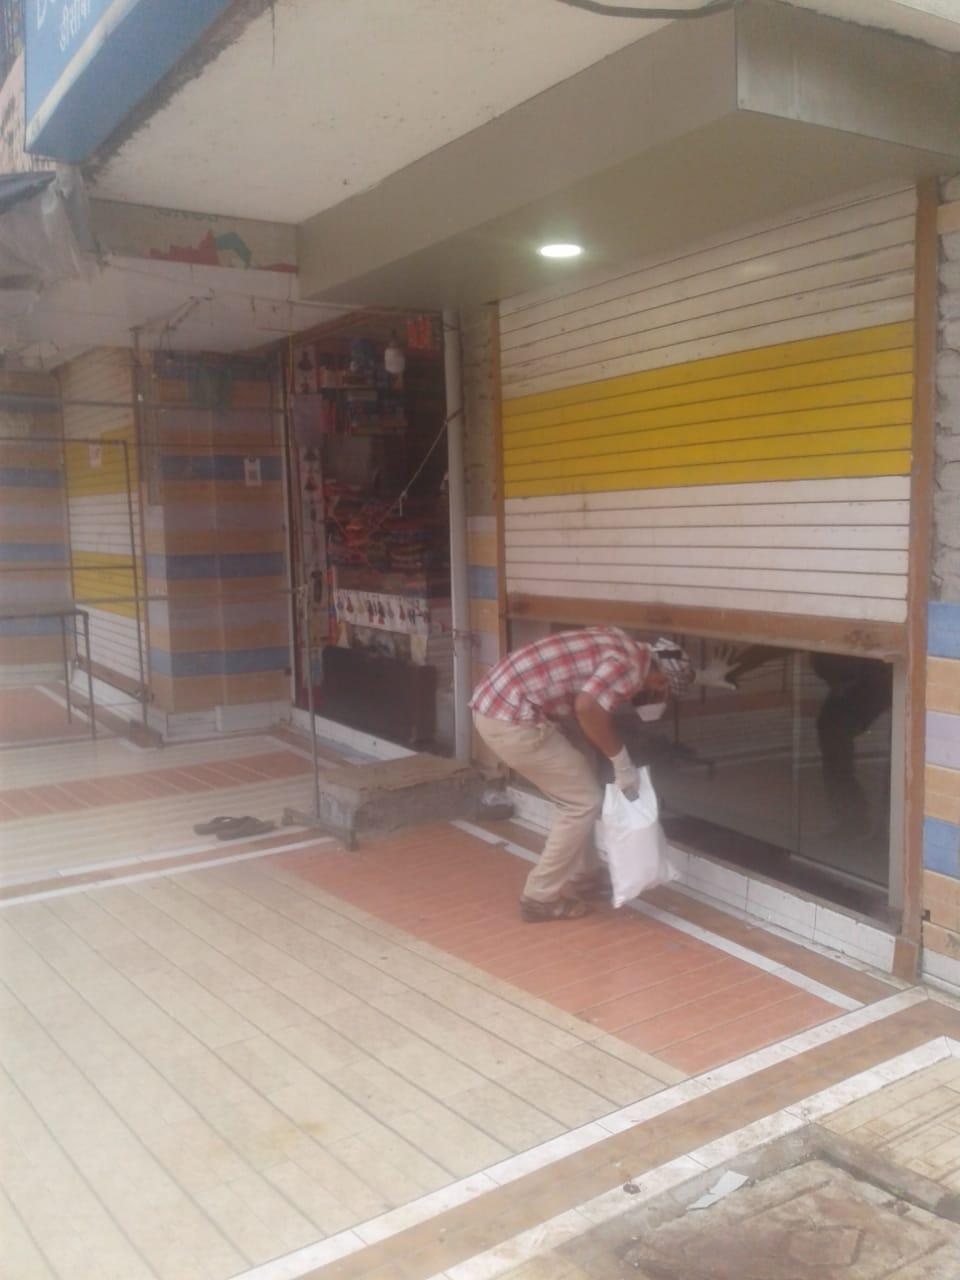 Accused entering ATM centre